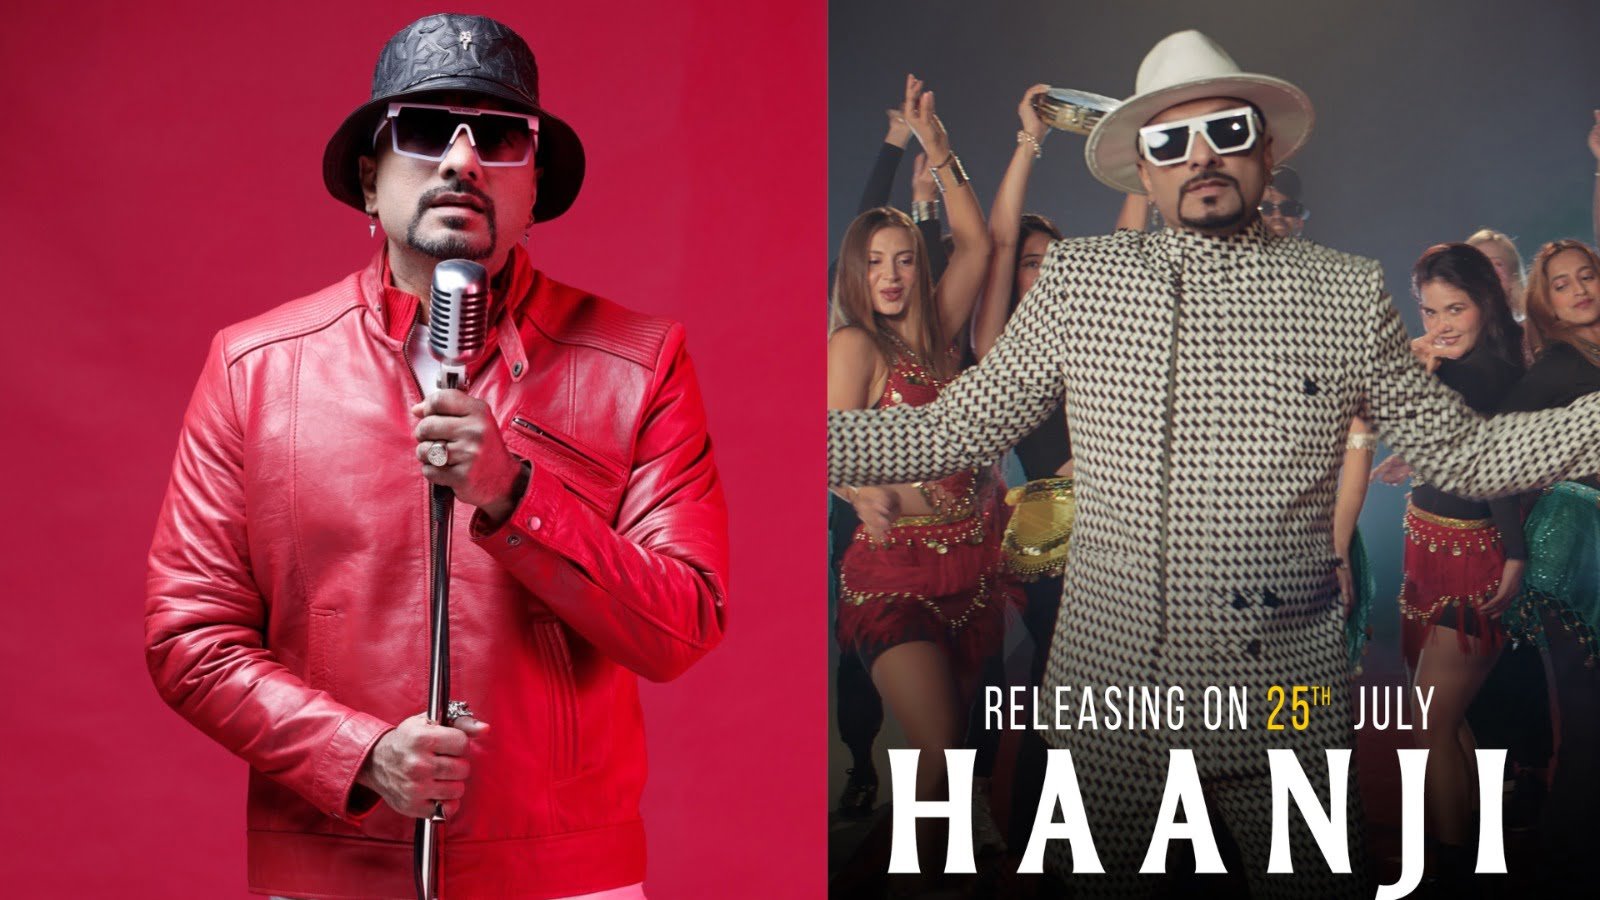 Dubai's Music Scene Comes Alive with Zak Zorro's Latest Hit "Haanji"